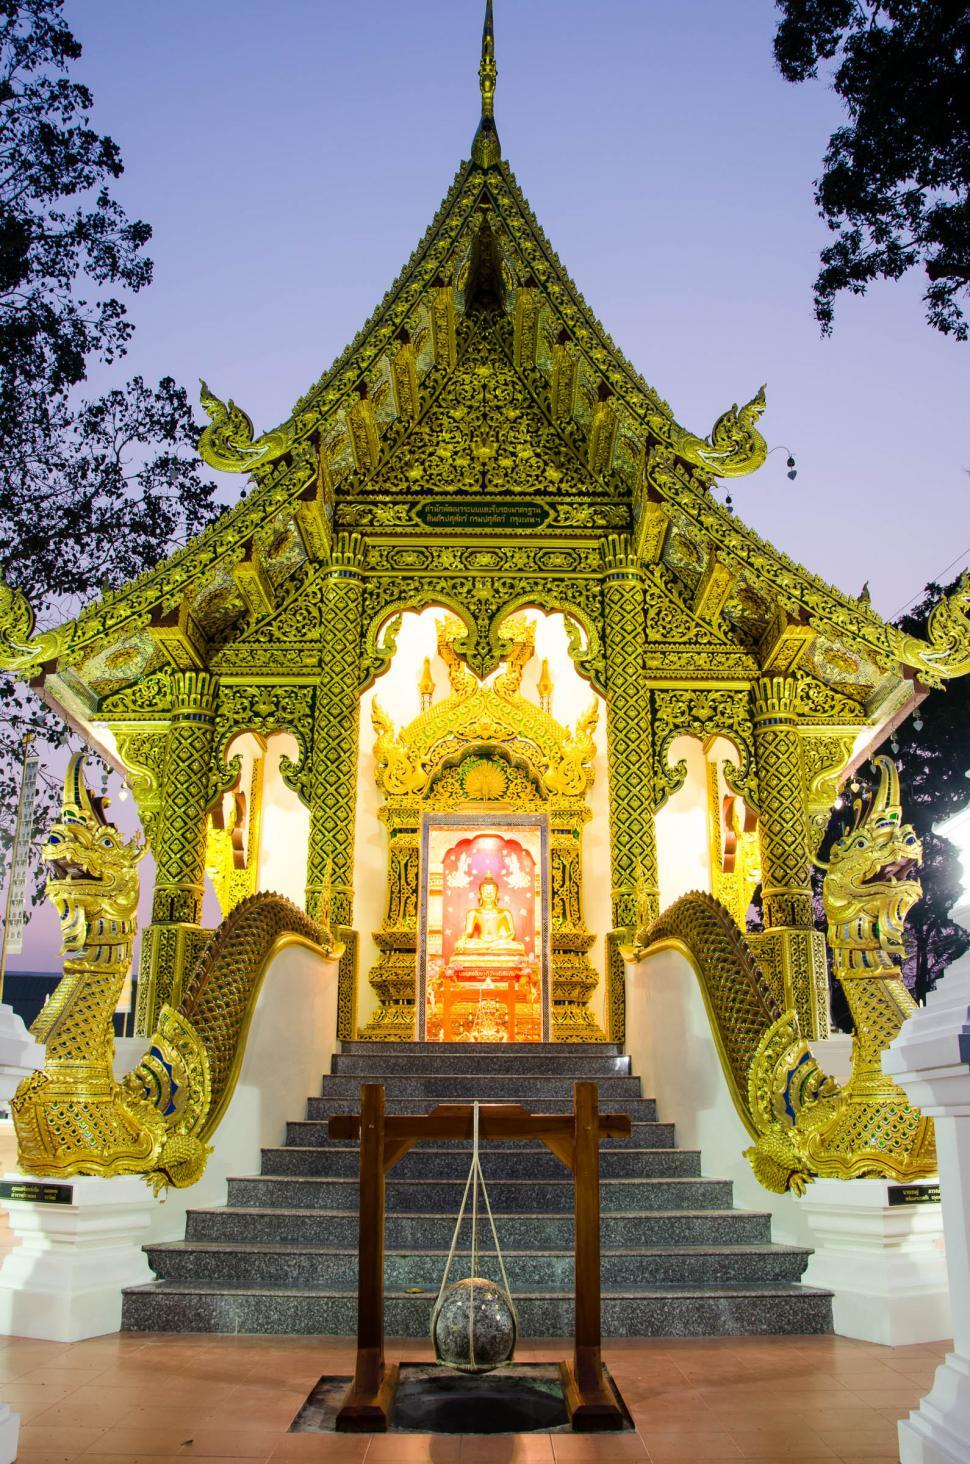 Free Image of Thai Temple 